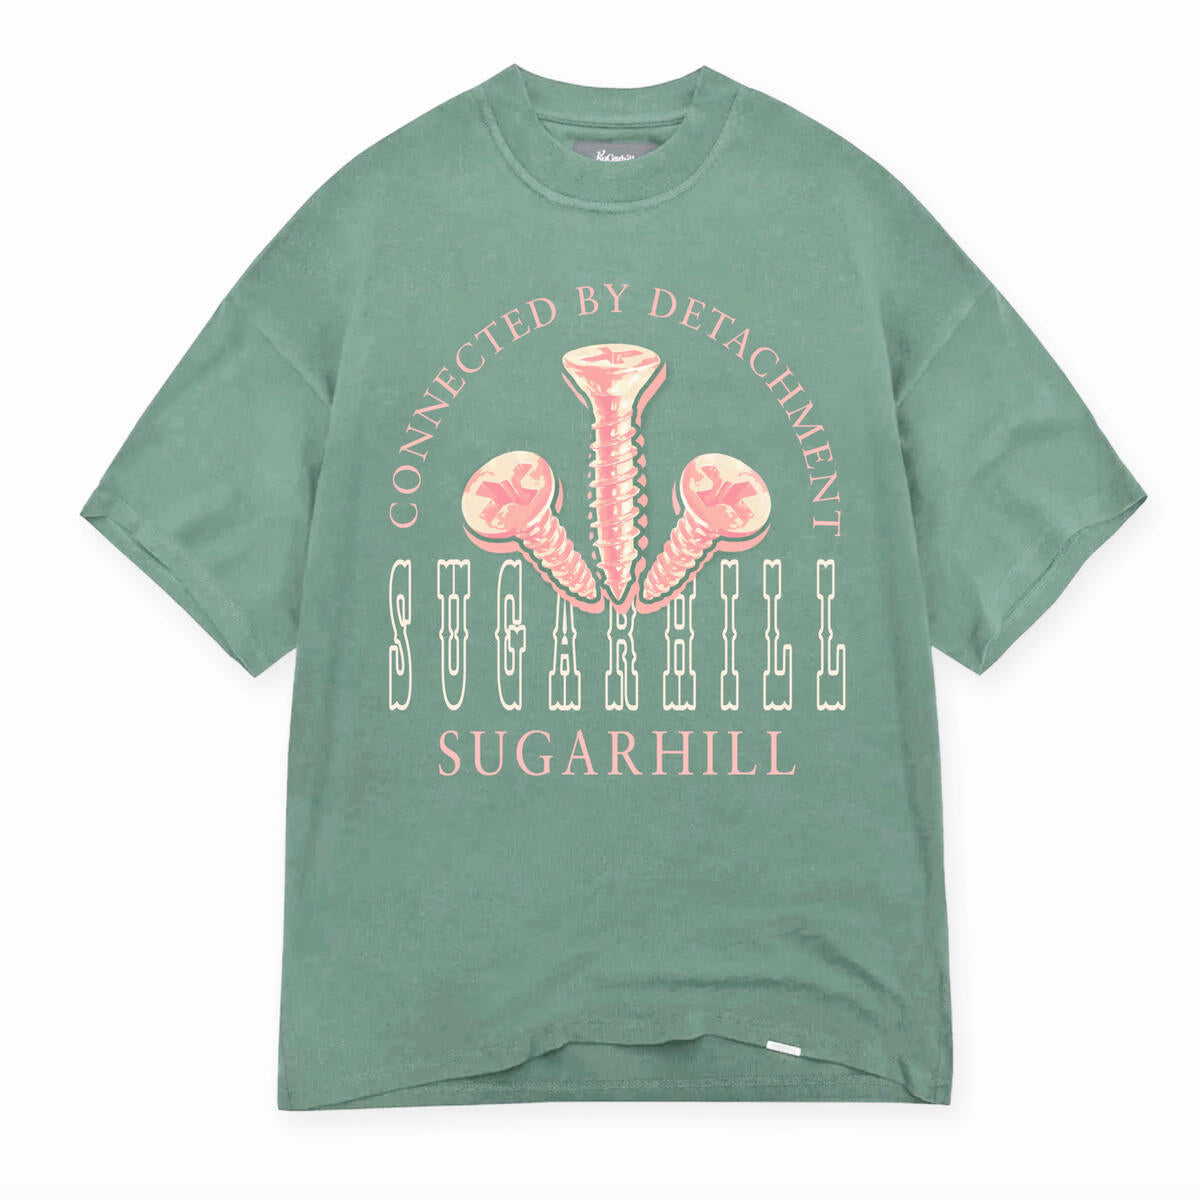 Sugarhill “Screwed Up” Tee (Green)